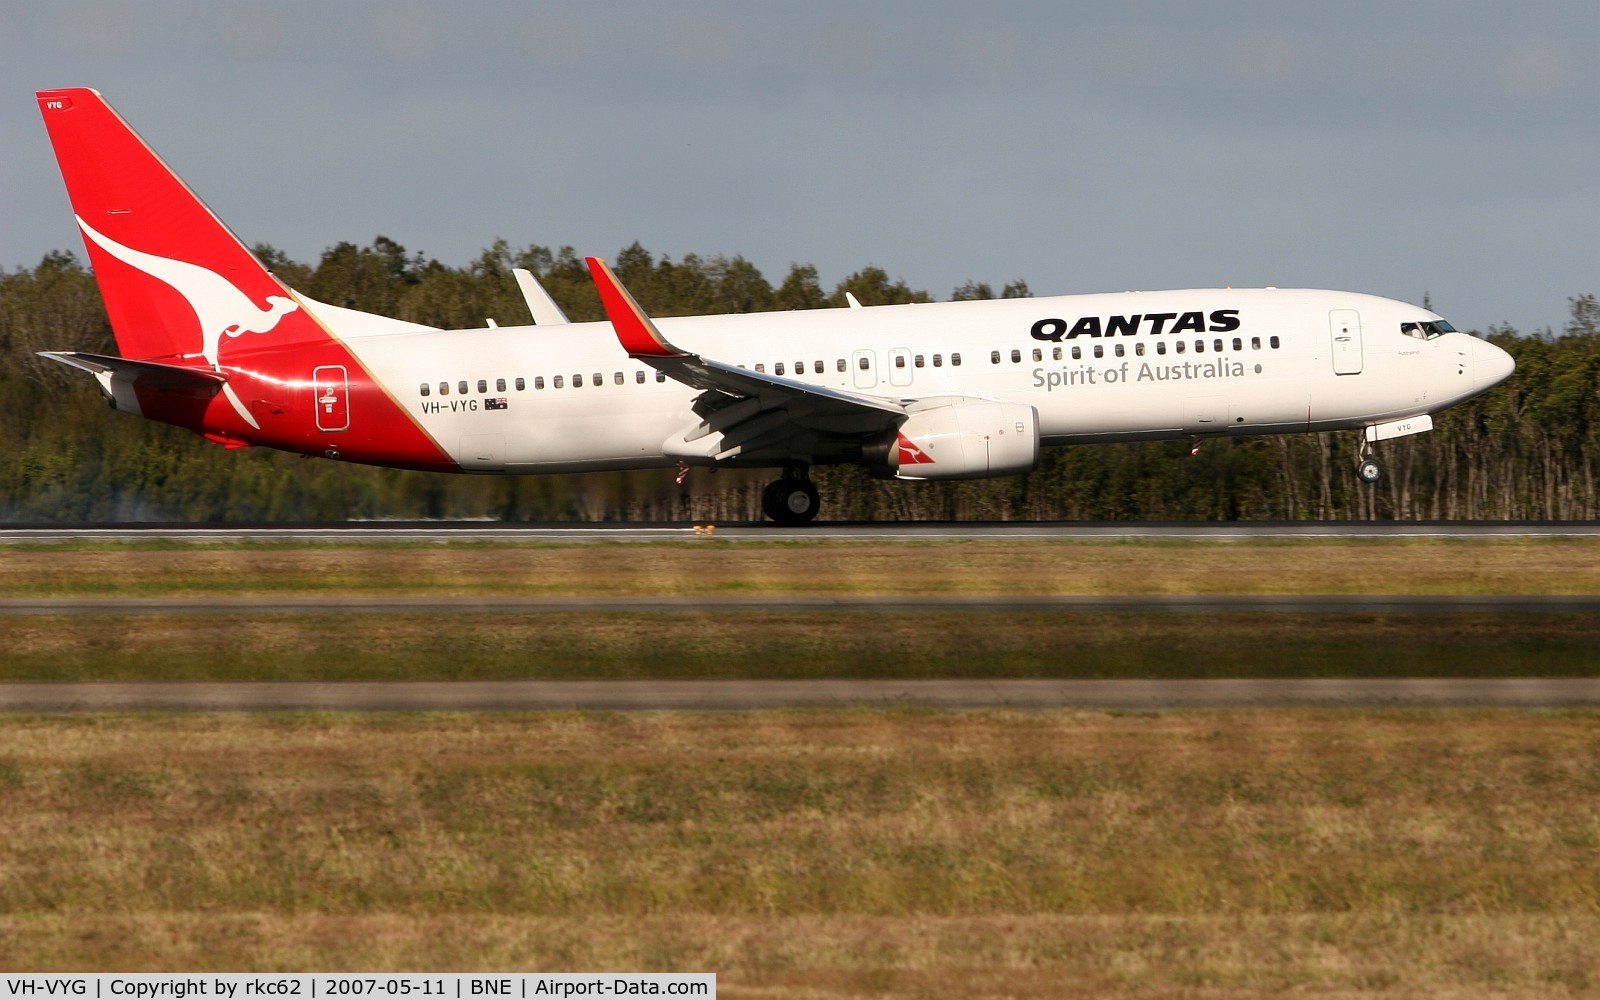 VH-VYG, 2005 Boeing 737-838 C/N 33995, Qantas 738 